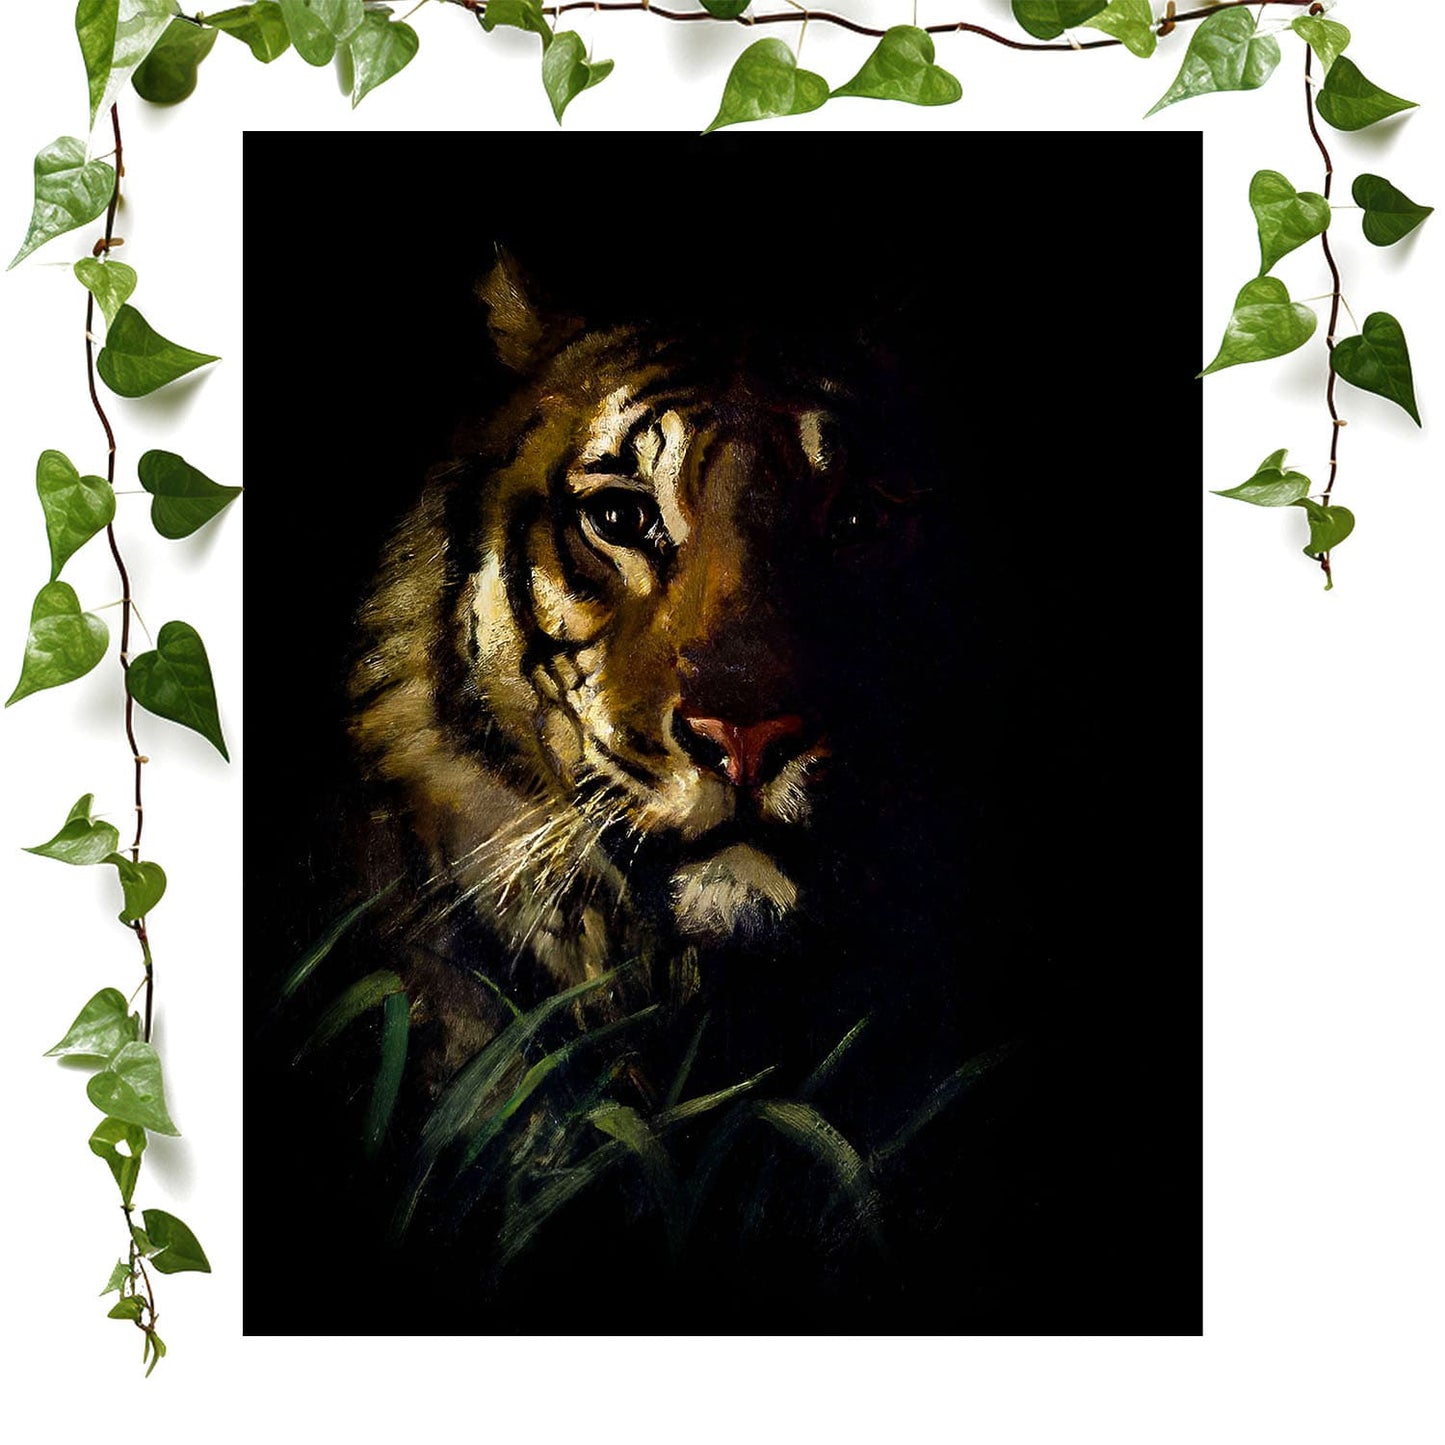 Dark Tiger art prints featuring a animal portrait, vintage wall art room decor